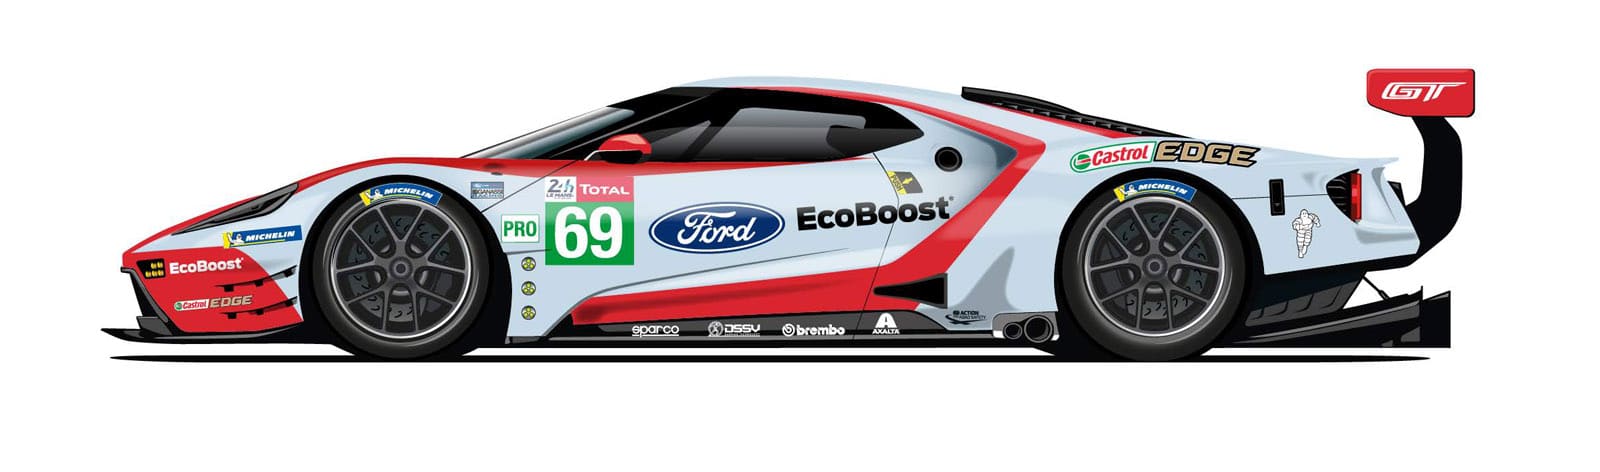 Ford Le Mans 2019 Samochód nr. 69